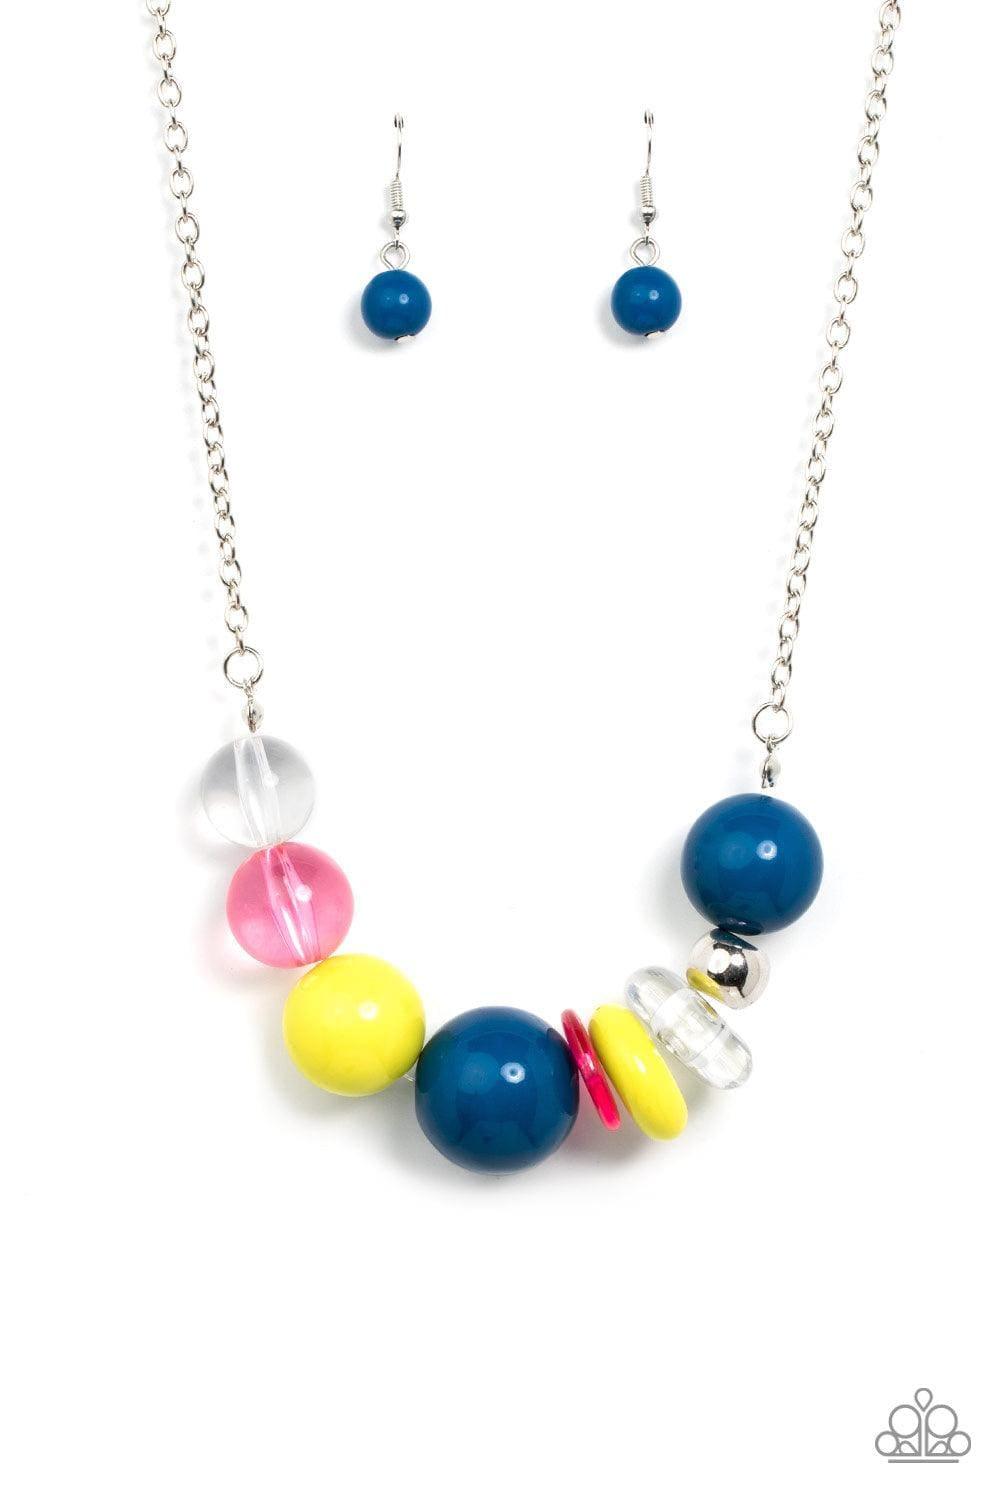 Paparazzi Accessories - Bauble Bonanza - Multicolor Necklace - Bling by JessieK